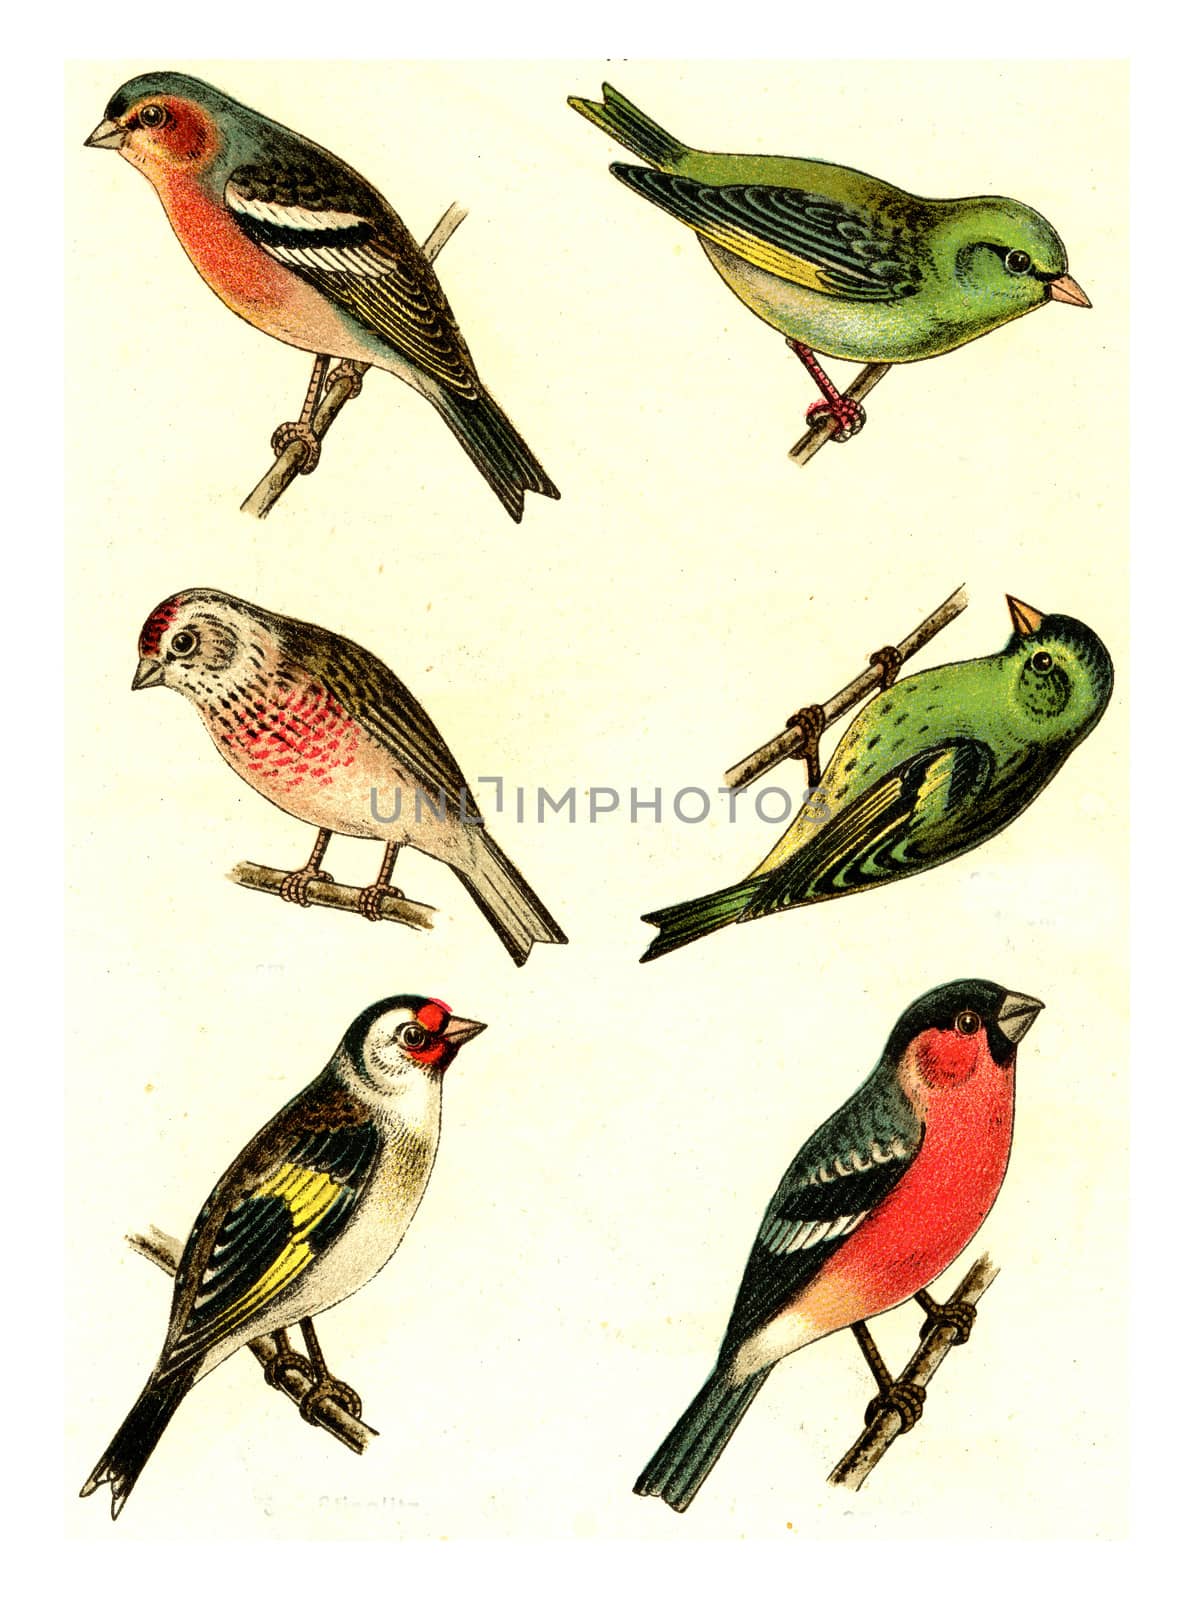 Chaffinch, Greenfinch, Linnet, Siskin, Goldfinch, Bullfinch, vintage engraved illustration. From Deutch Birds of Europe Atlas.
